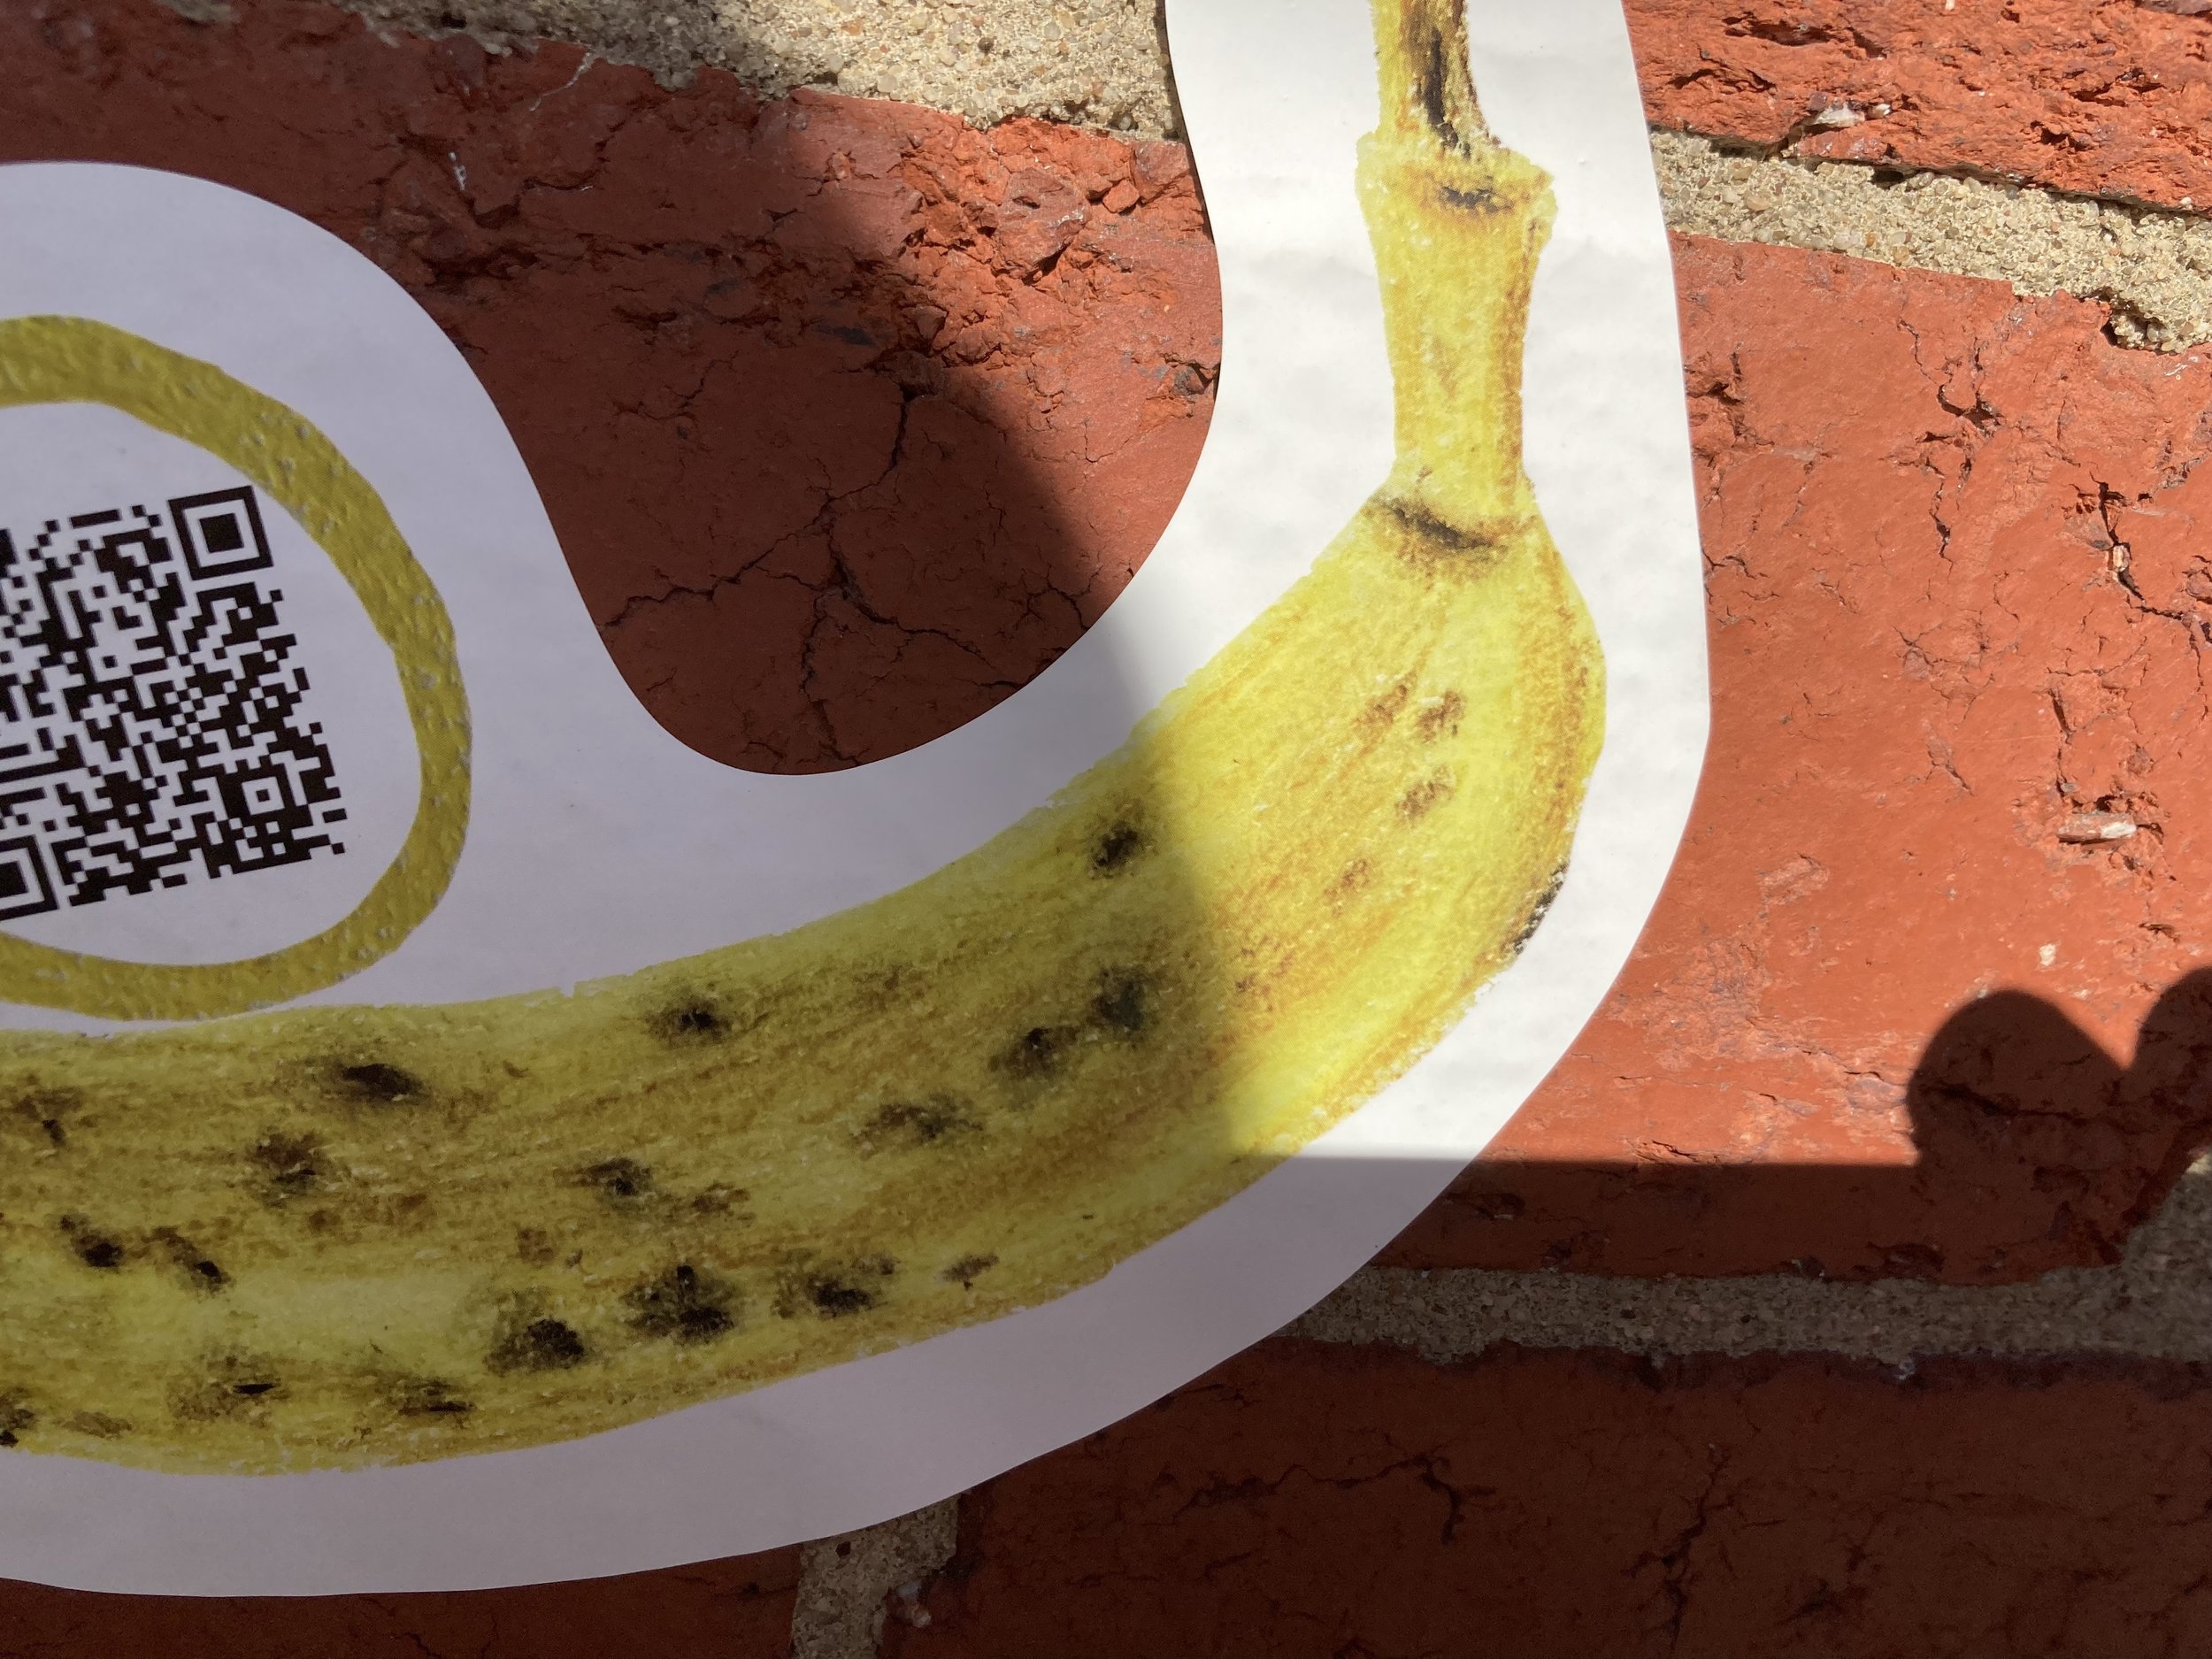 banana qr.jpg